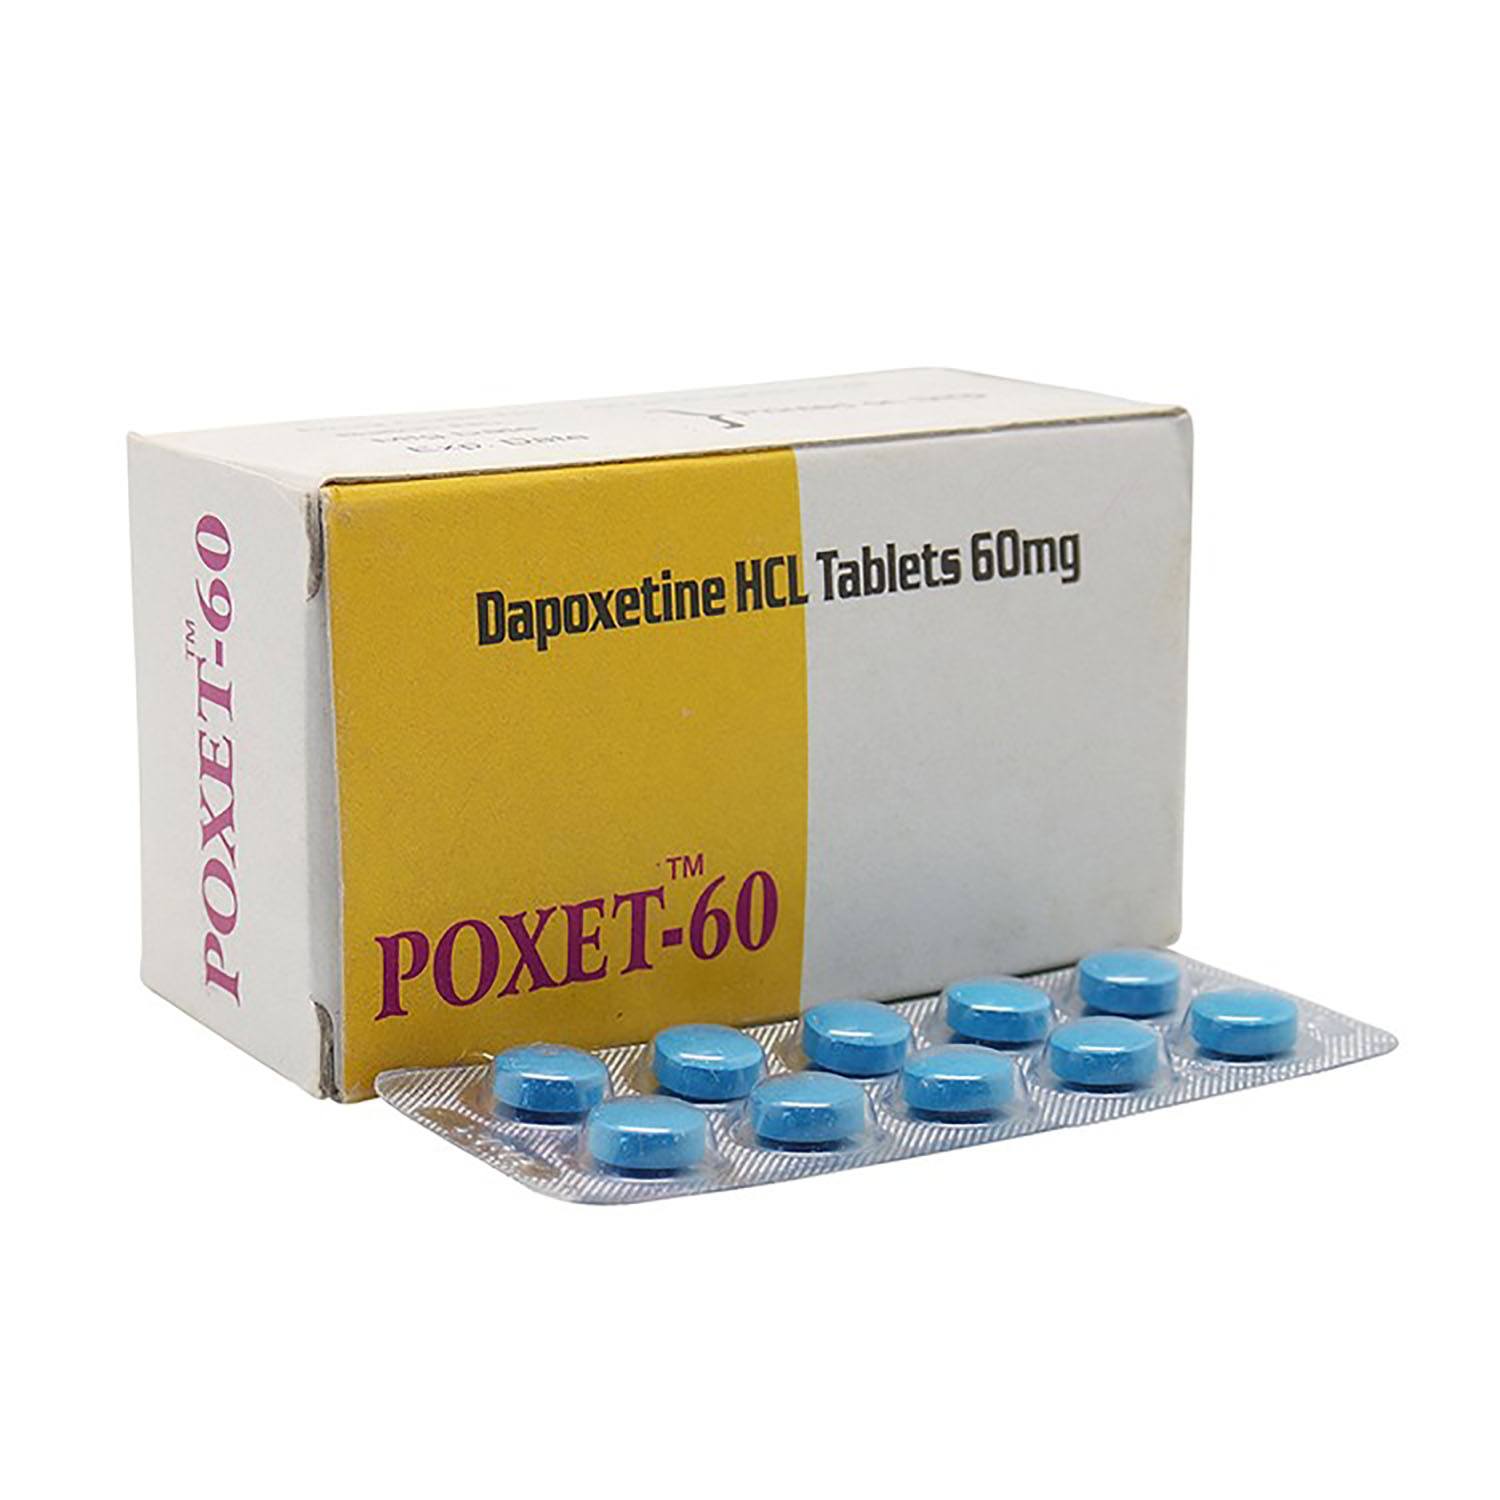 Price of amoxicillin and potassium clavulanate